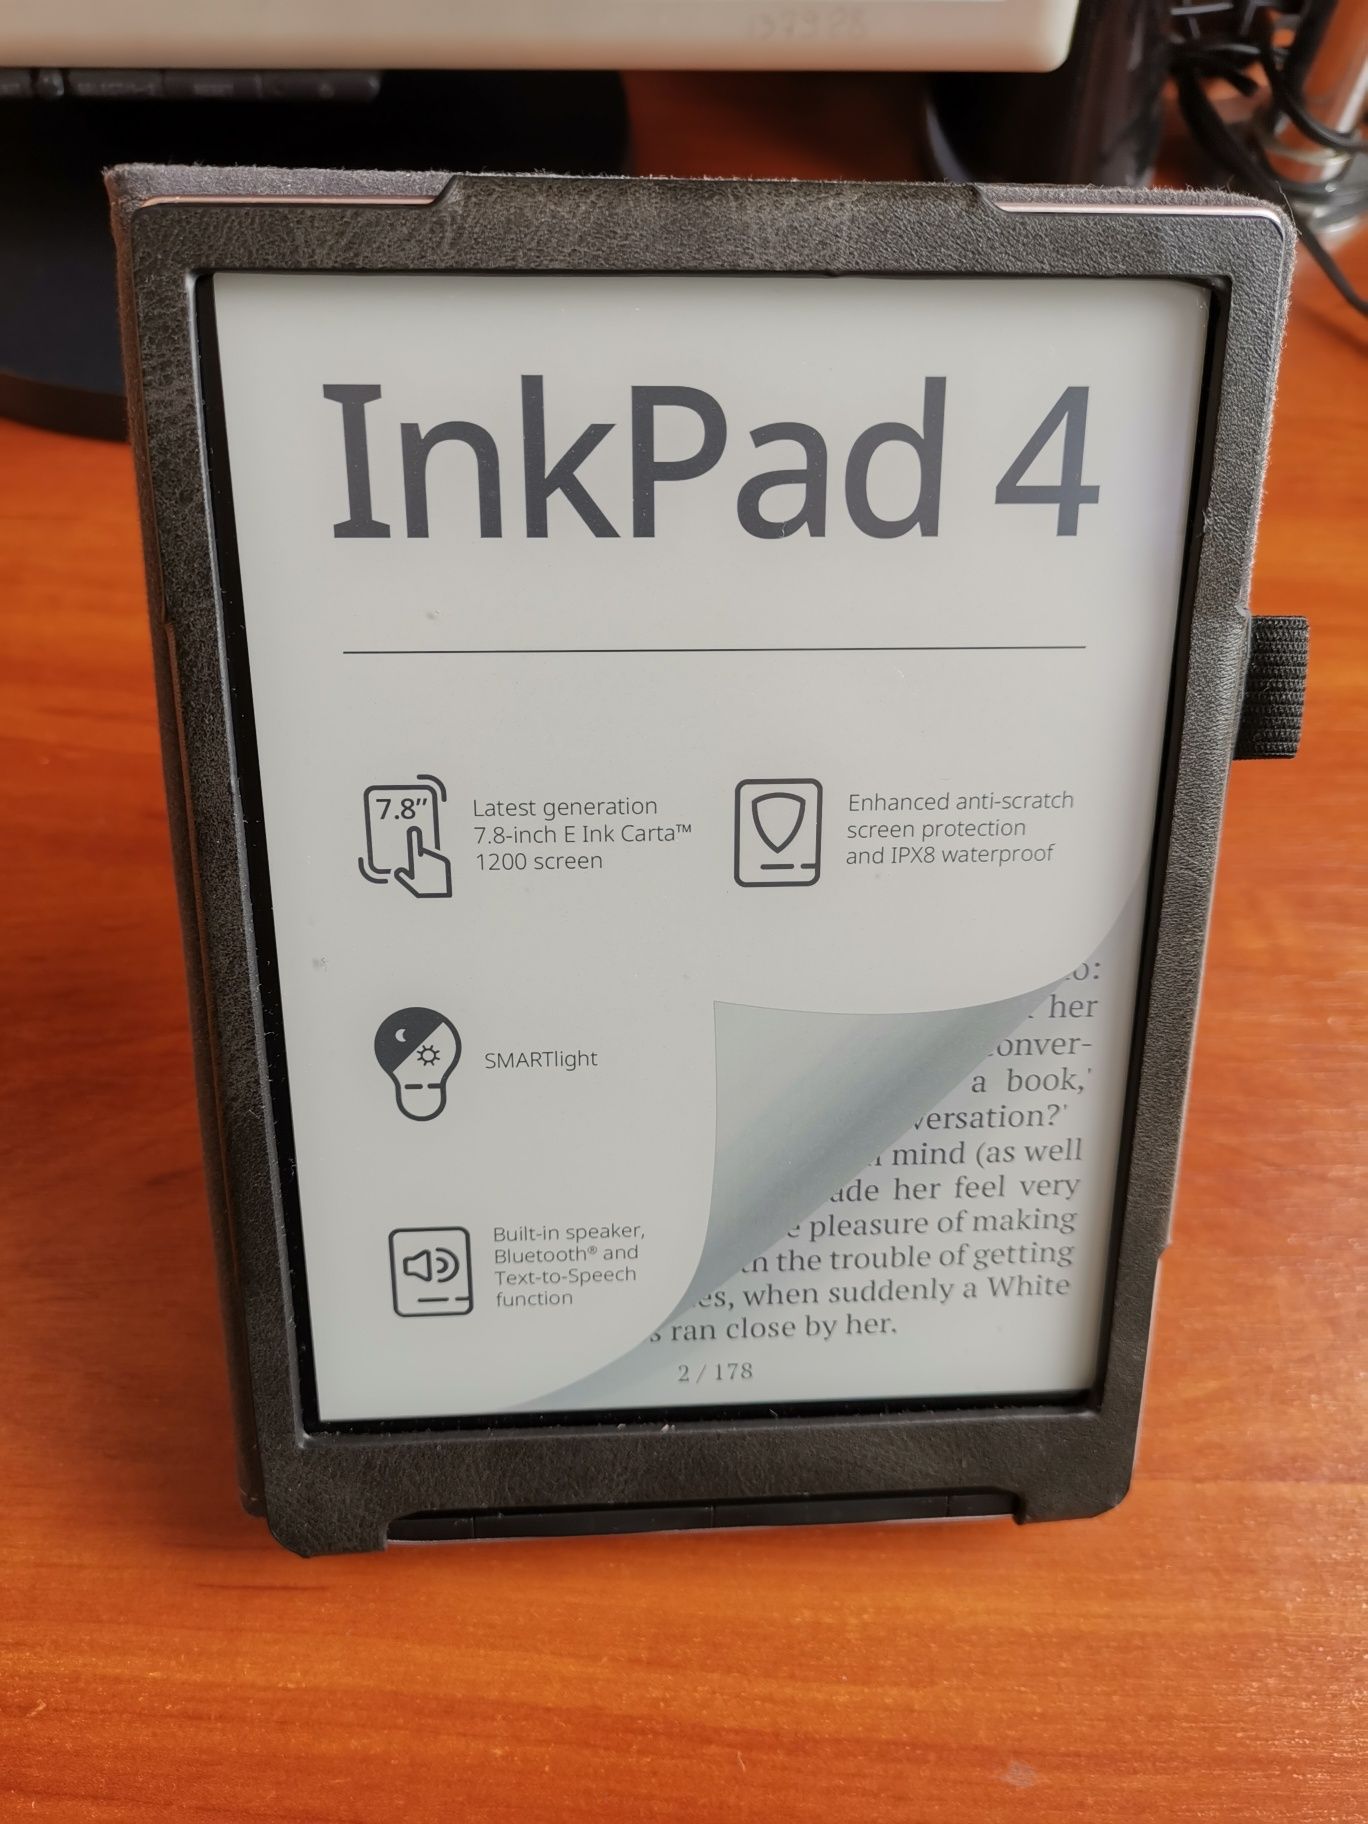 Чехол для книги PocketBook InkPad Color 2/Pocketbook InkPad 4